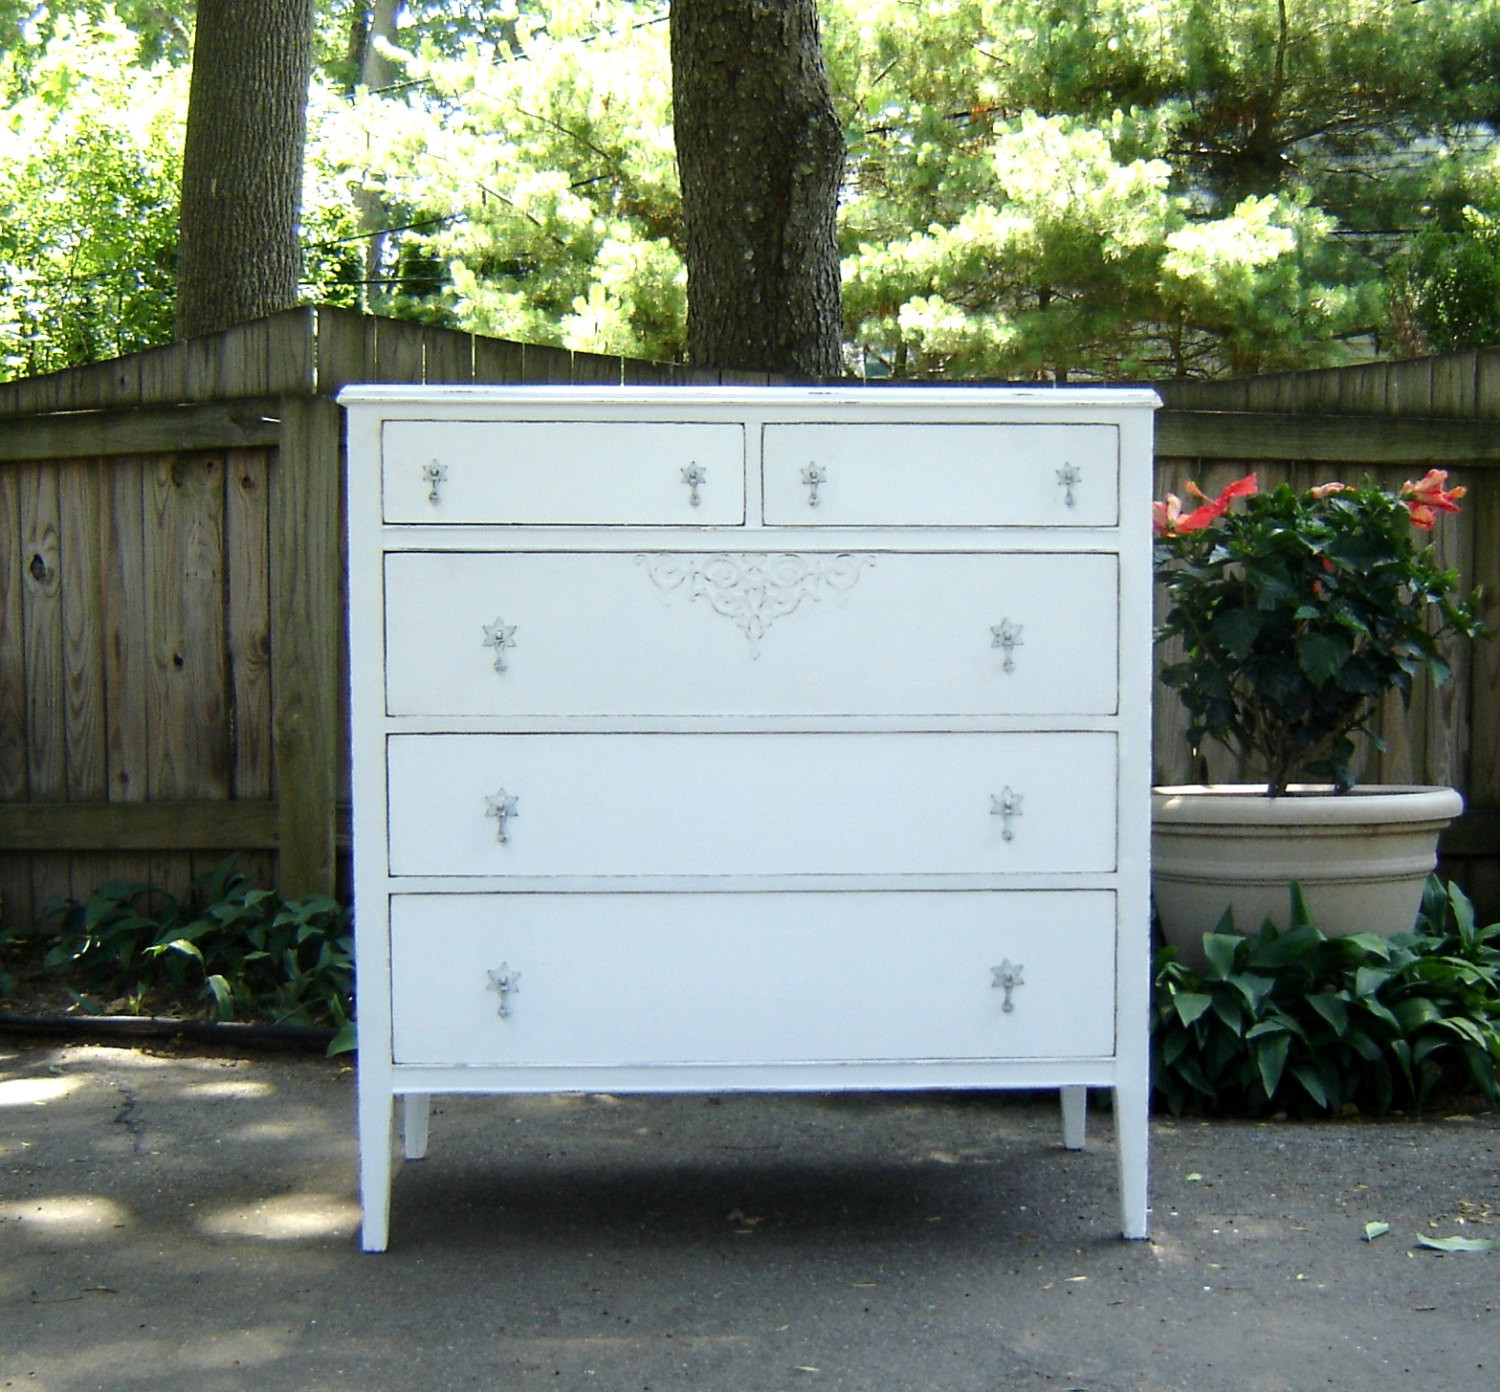 Best ideas about Shabby Chic White Dresser
. Save or Pin Antique Shabby Chic White Dresser Now.